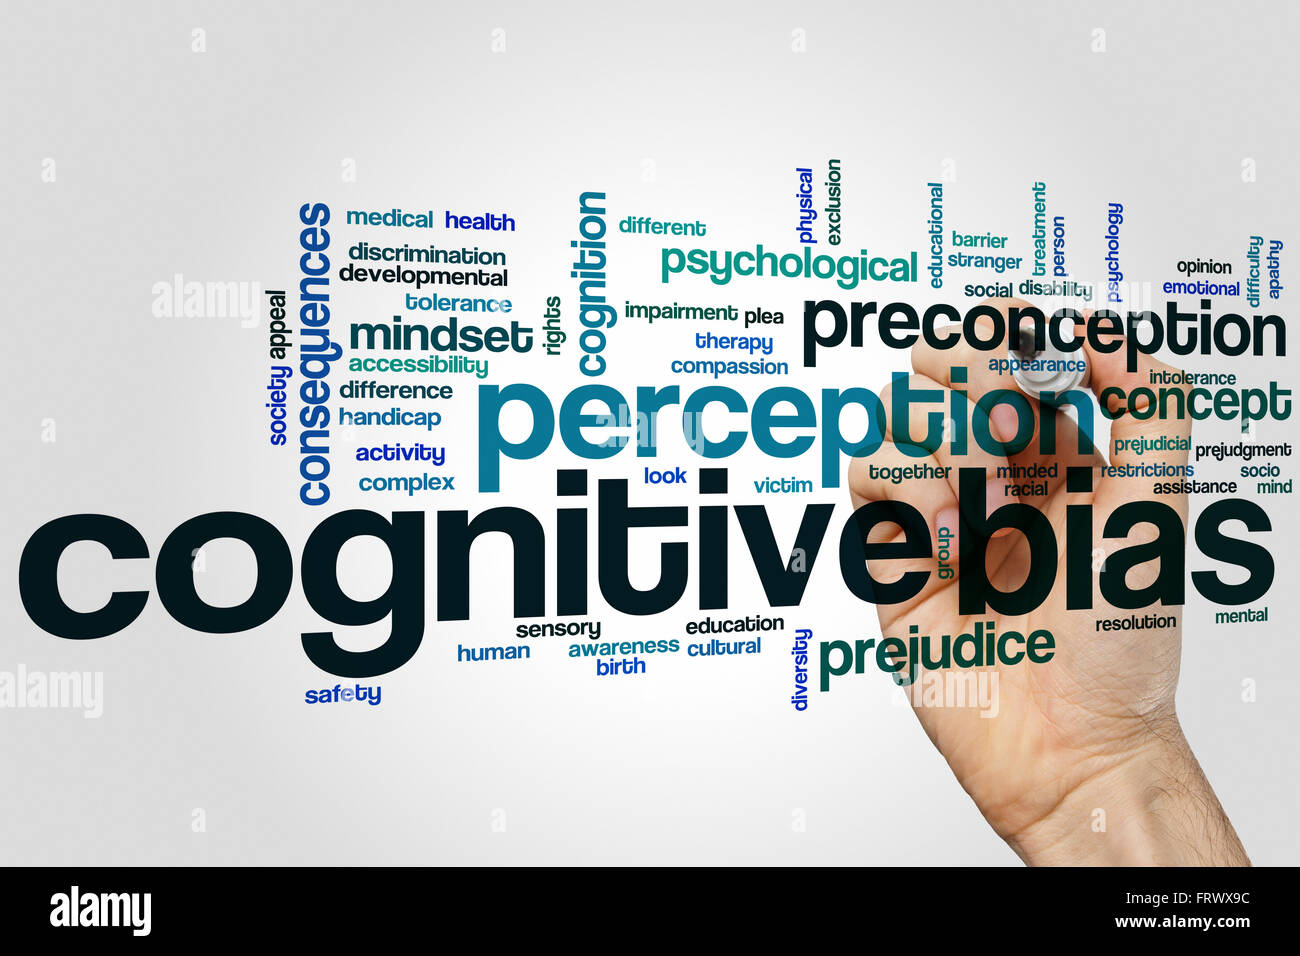 Cognitive bias concept word cloud background Stock Photo